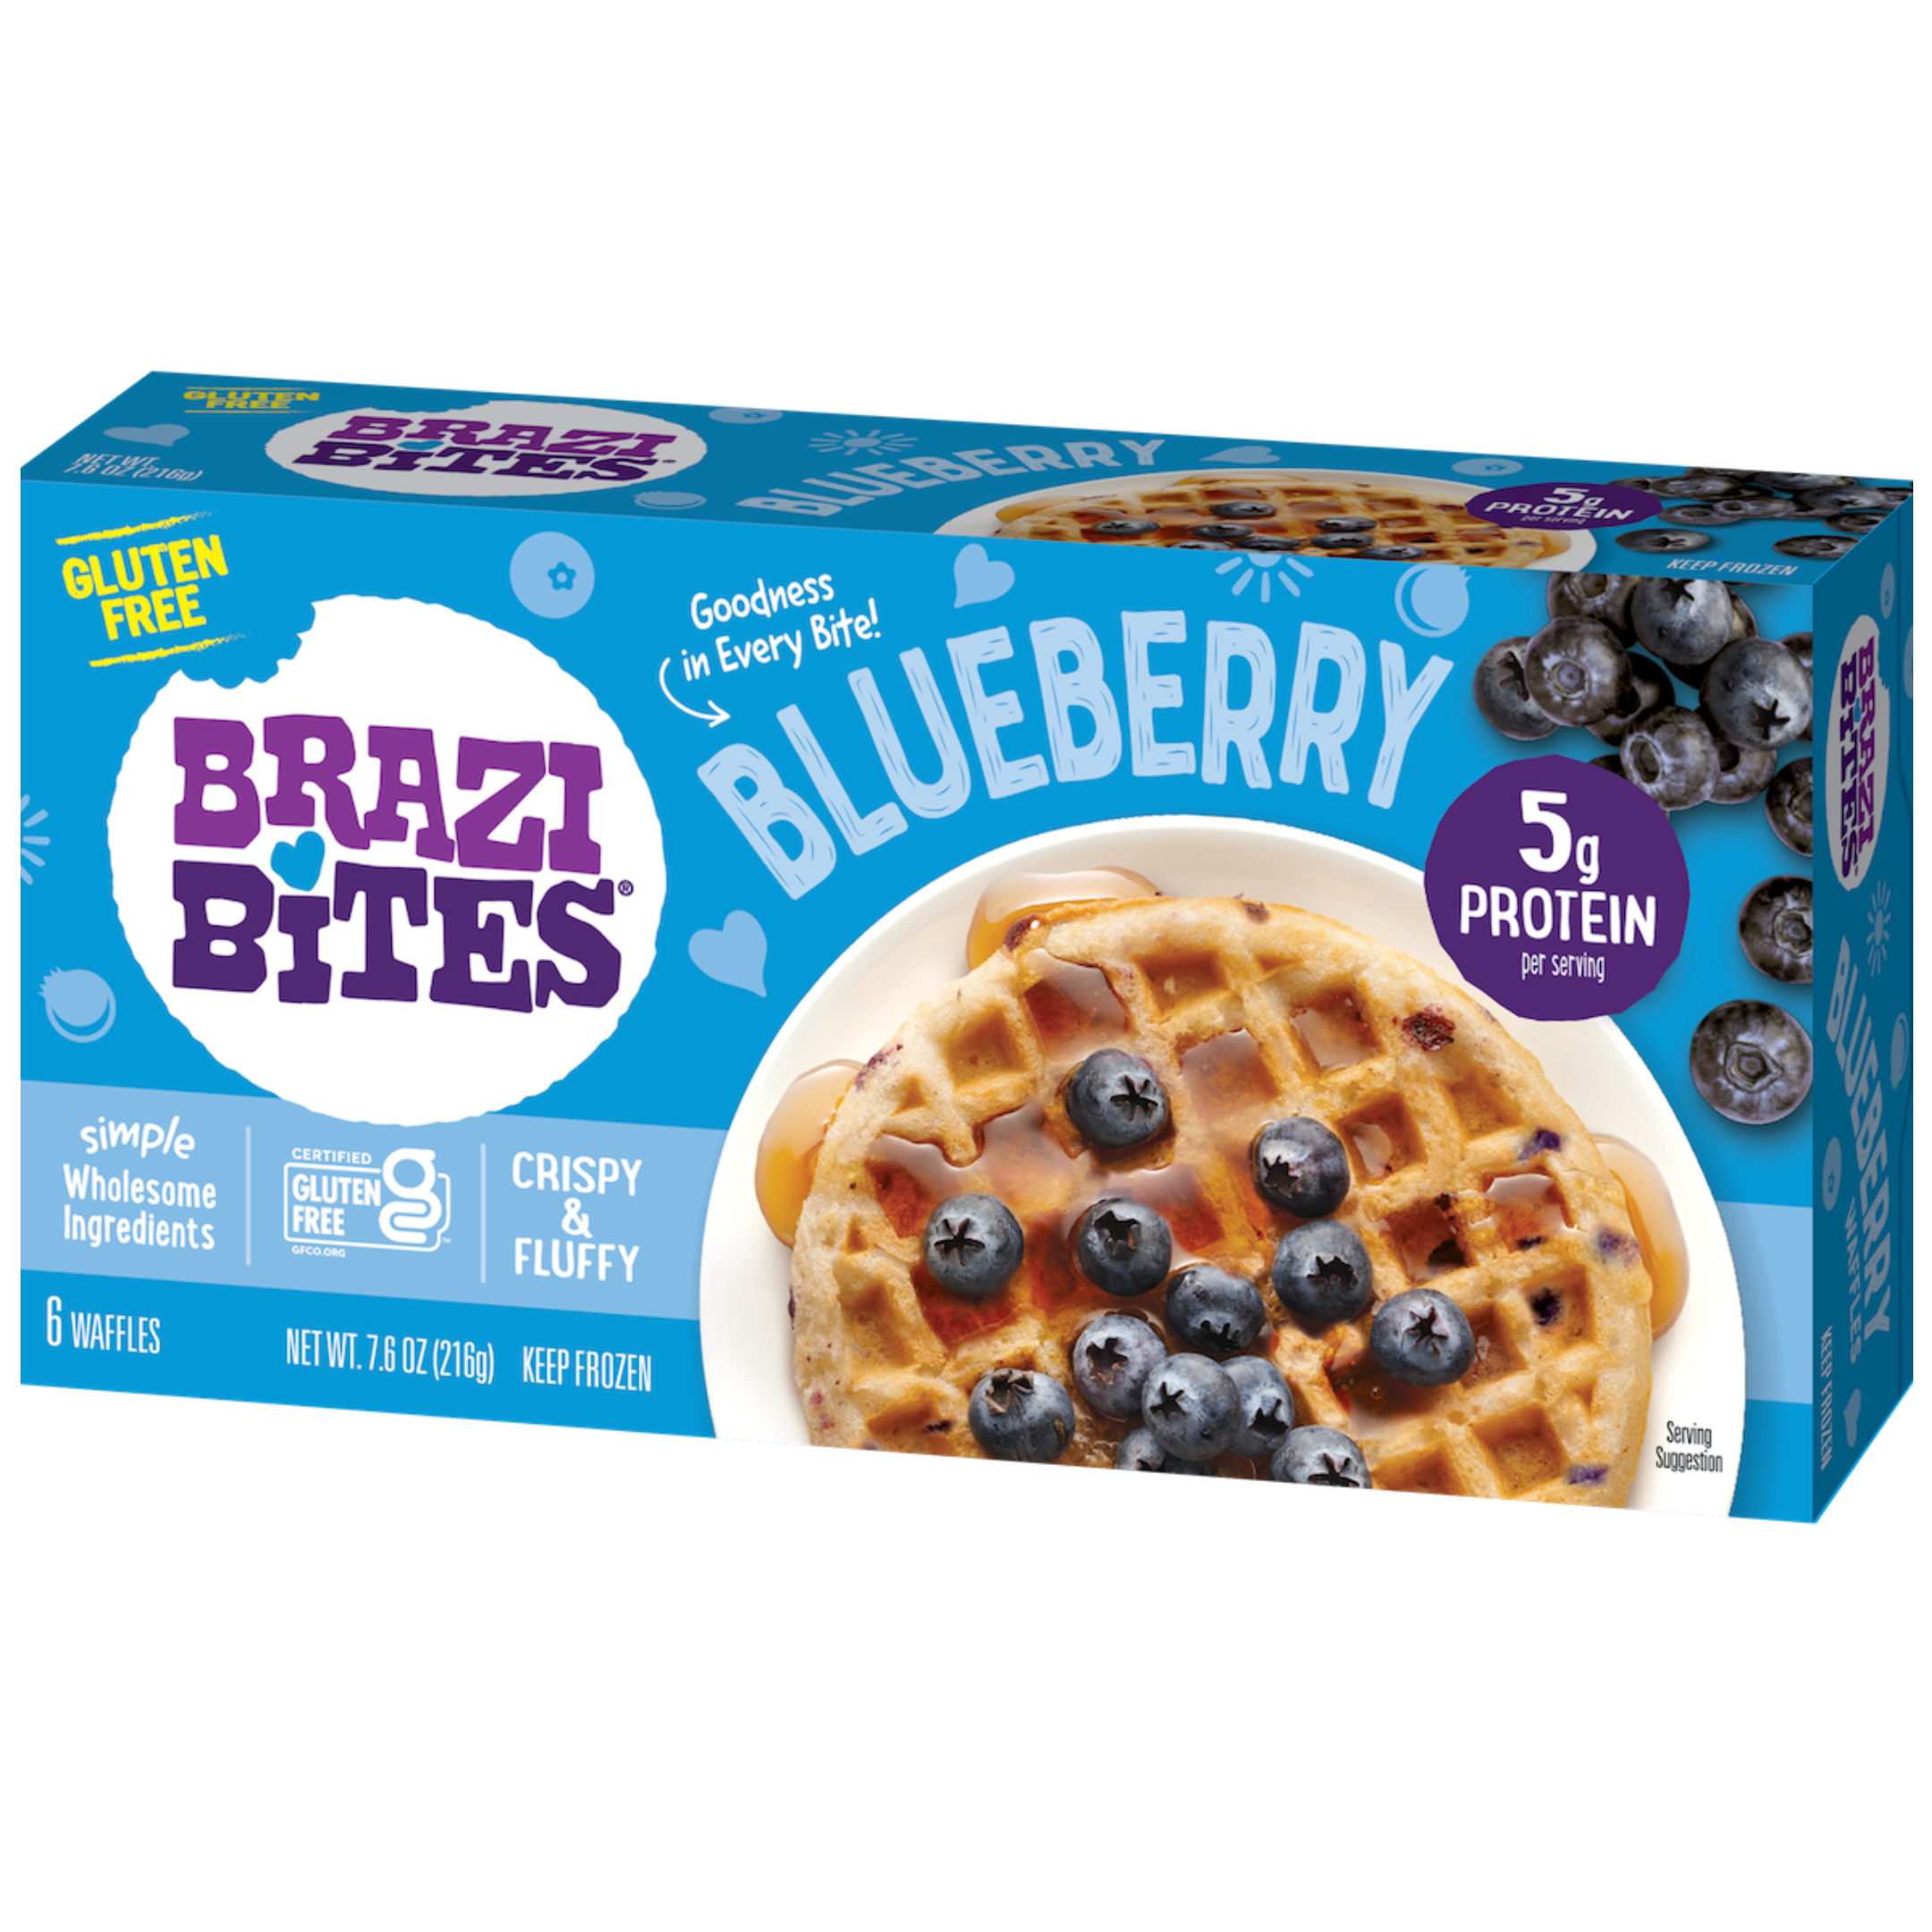 Blueberry Gluten-Free Waffles